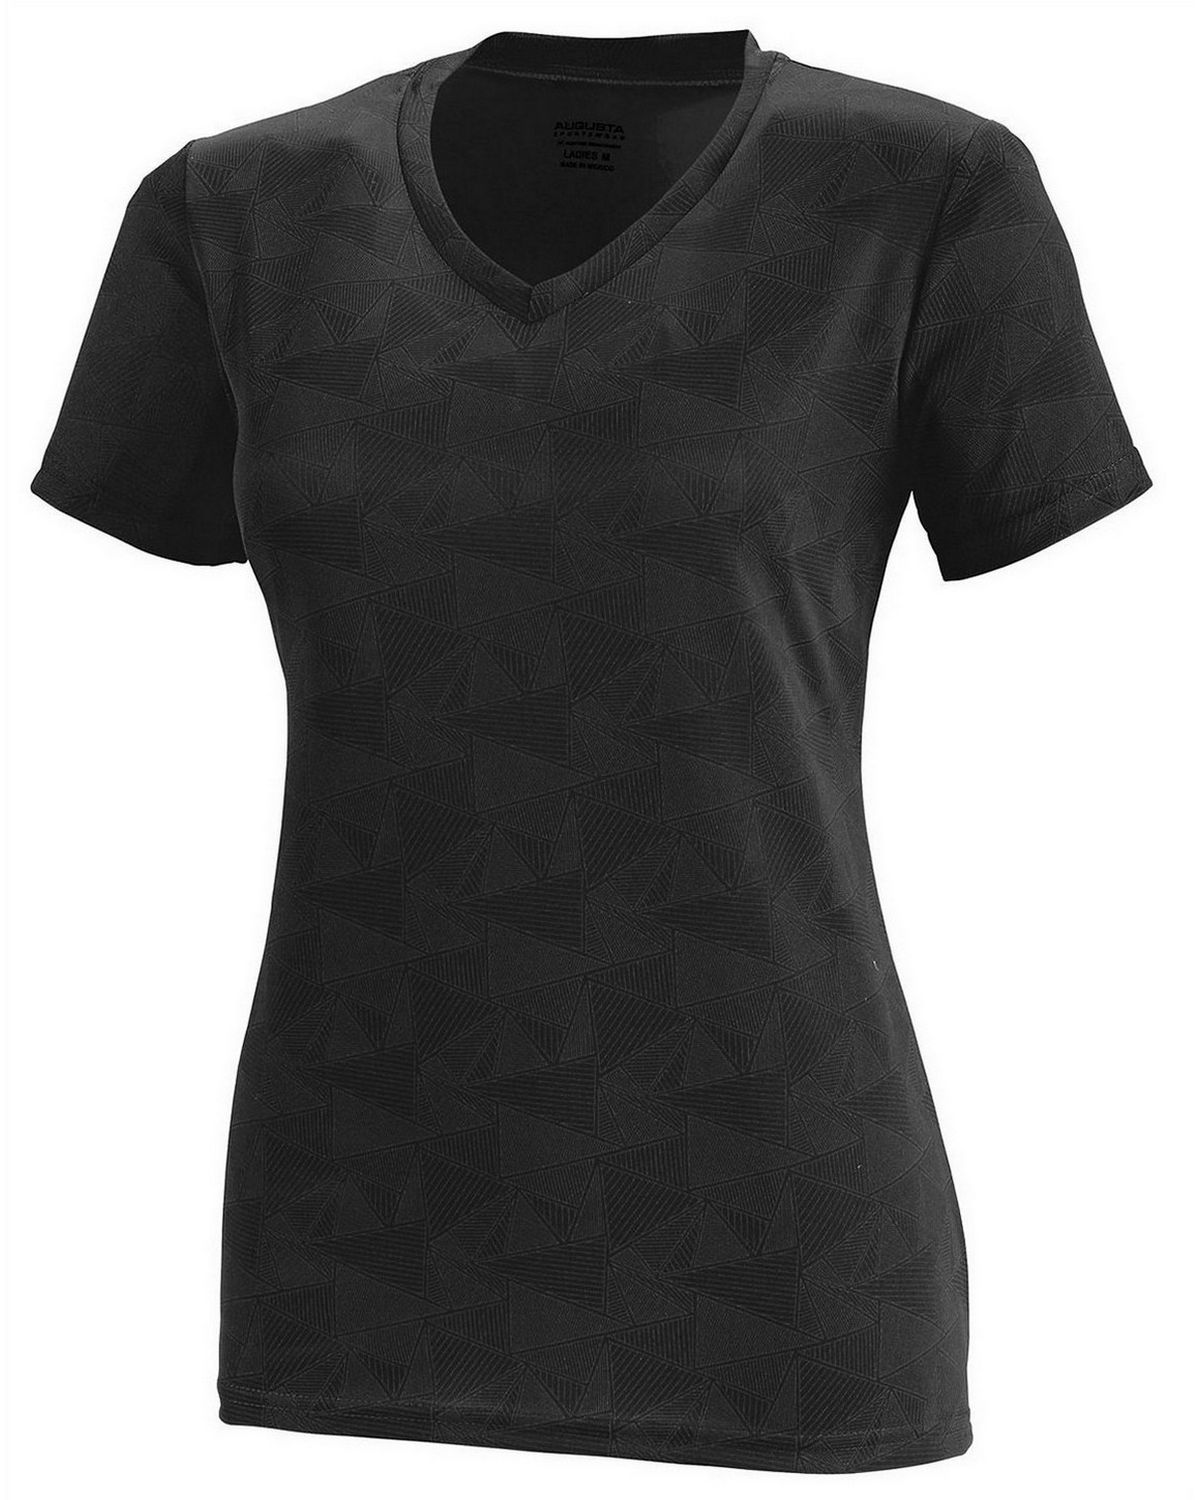 Augusta Sportswear 1792 Women's Wicking Printed Polyester Short-Sleeve T-Shirt